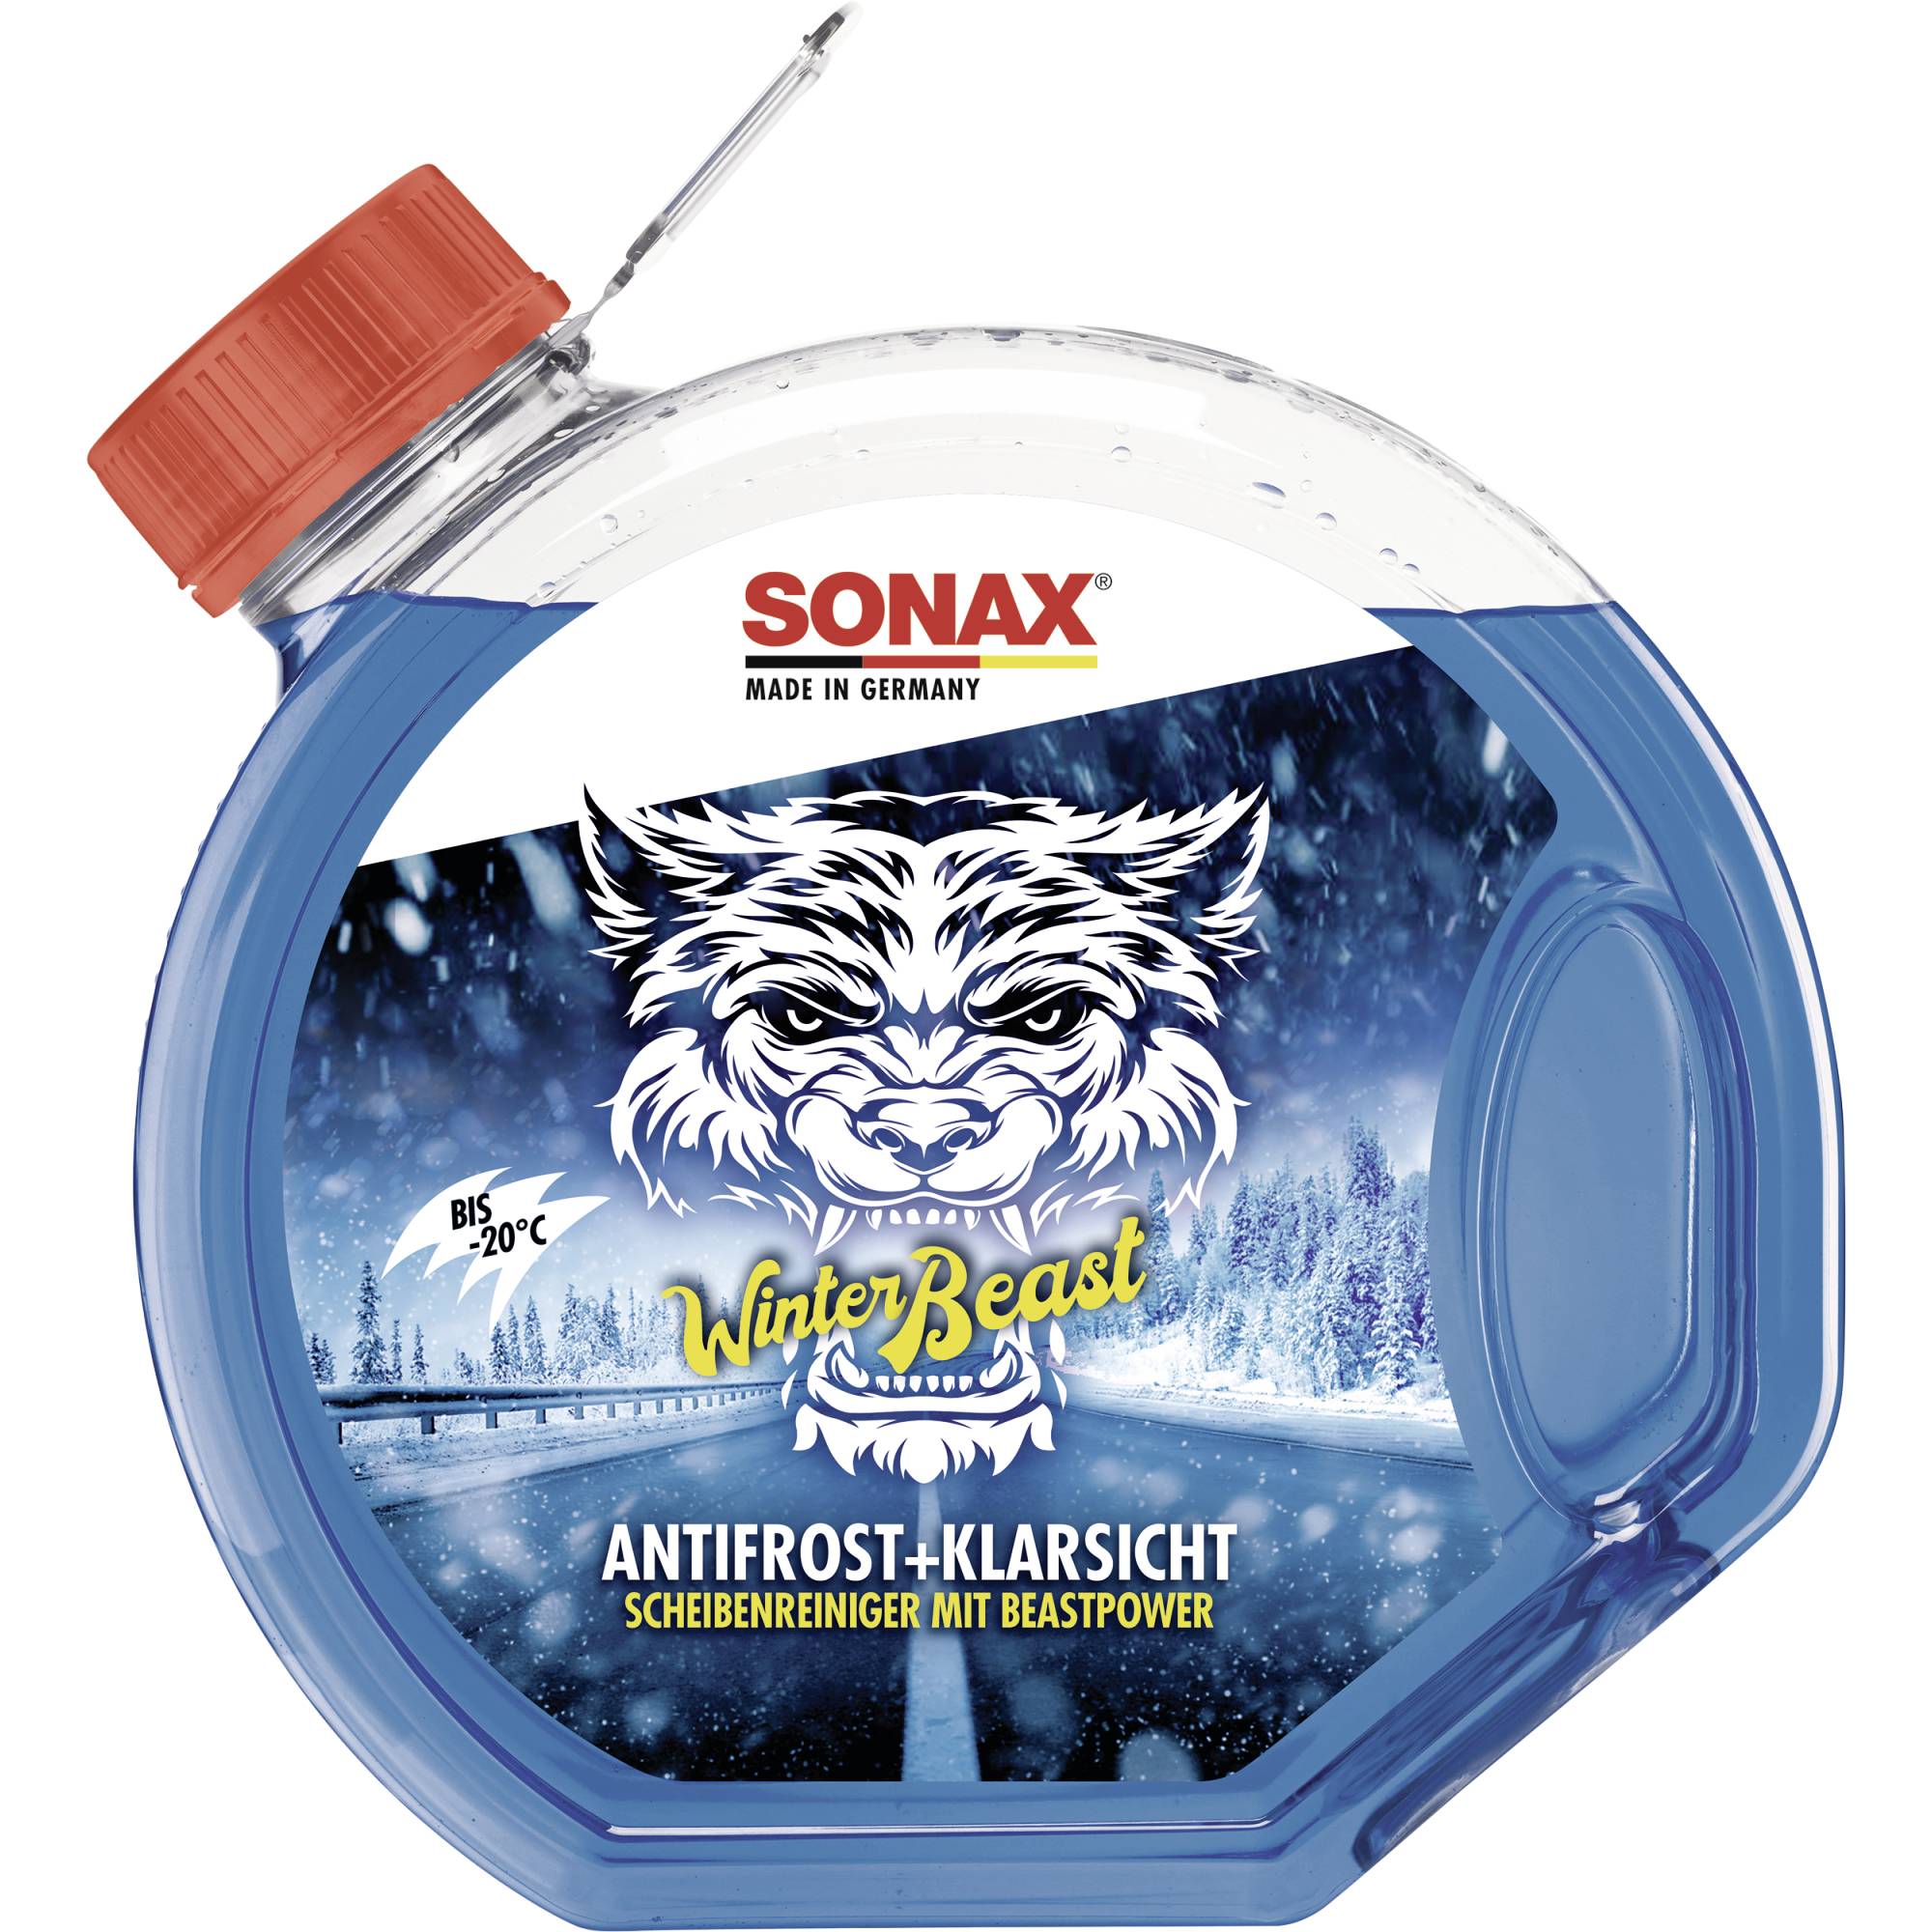 Sonax Winterbeast Antifrost + Klarsicht